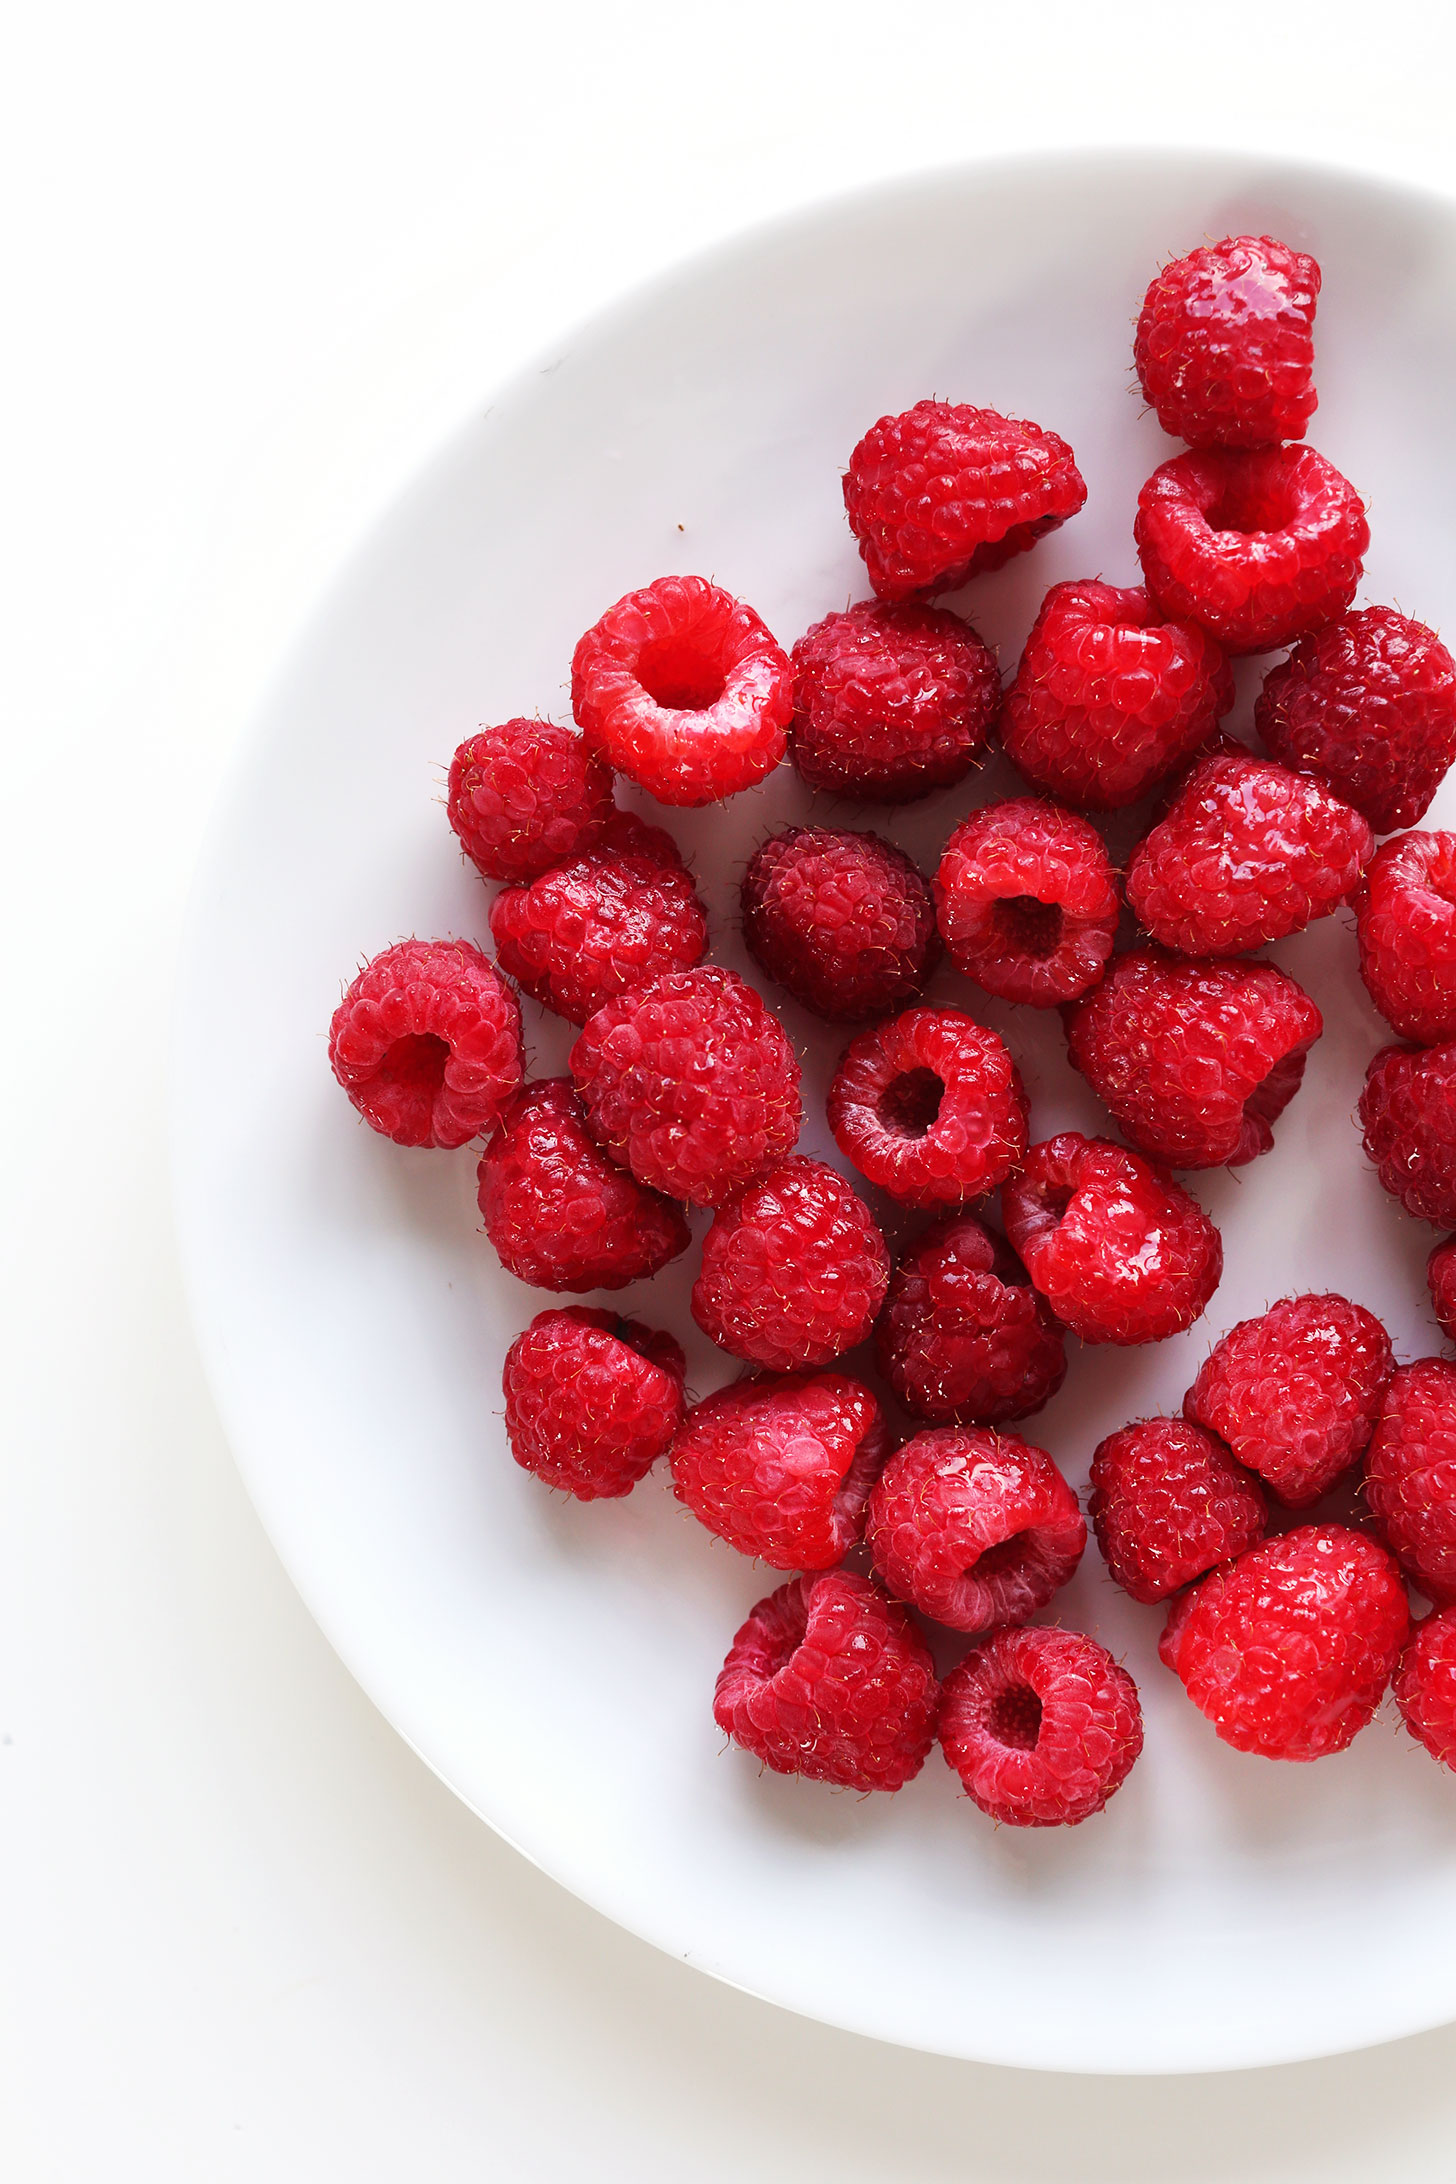 Plump fresh raspberries for making homemade vegan ice cream